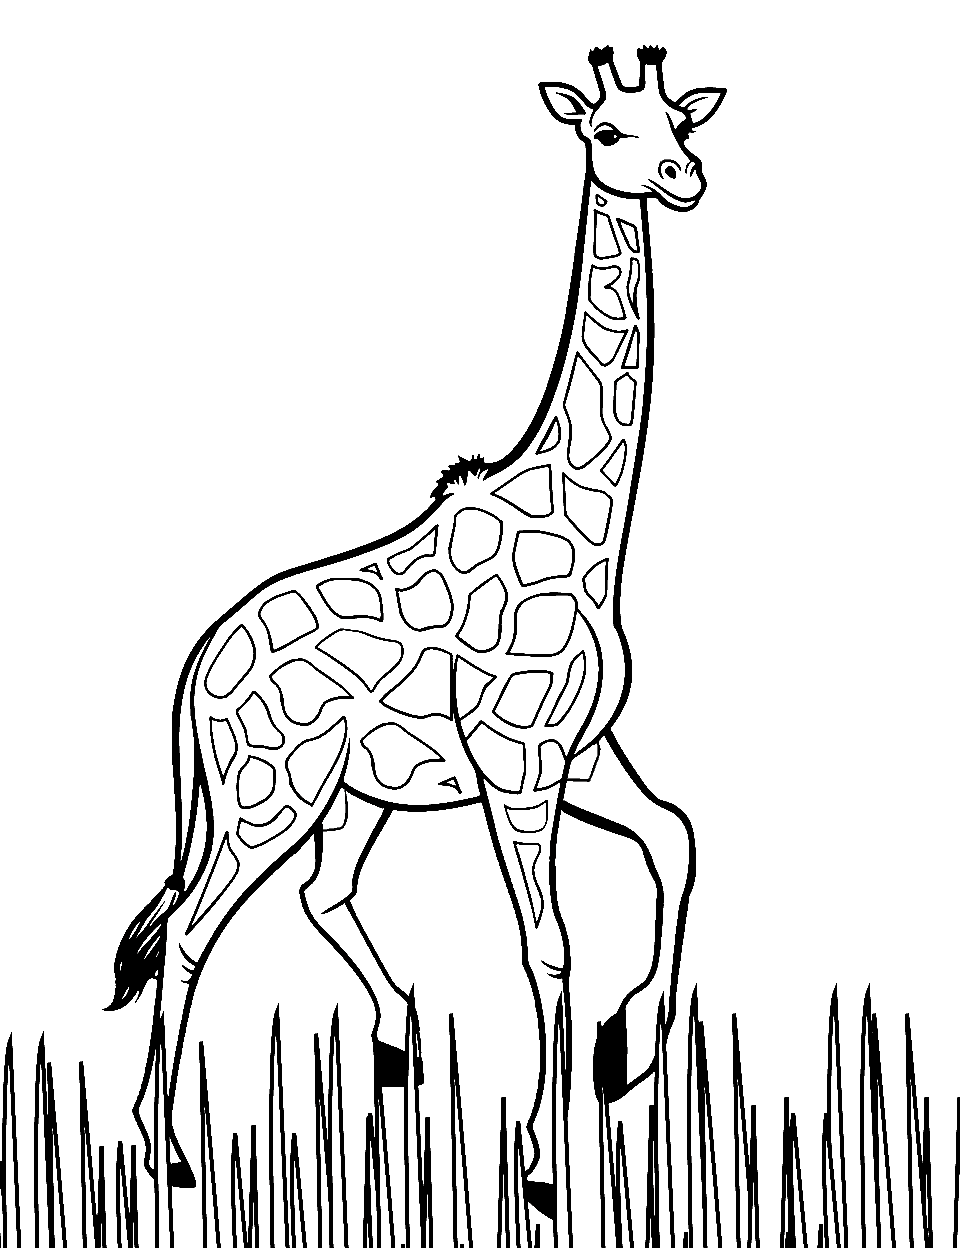 Grassland Gallop Coloring Page - A giraffe running swiftly through the open grassland.